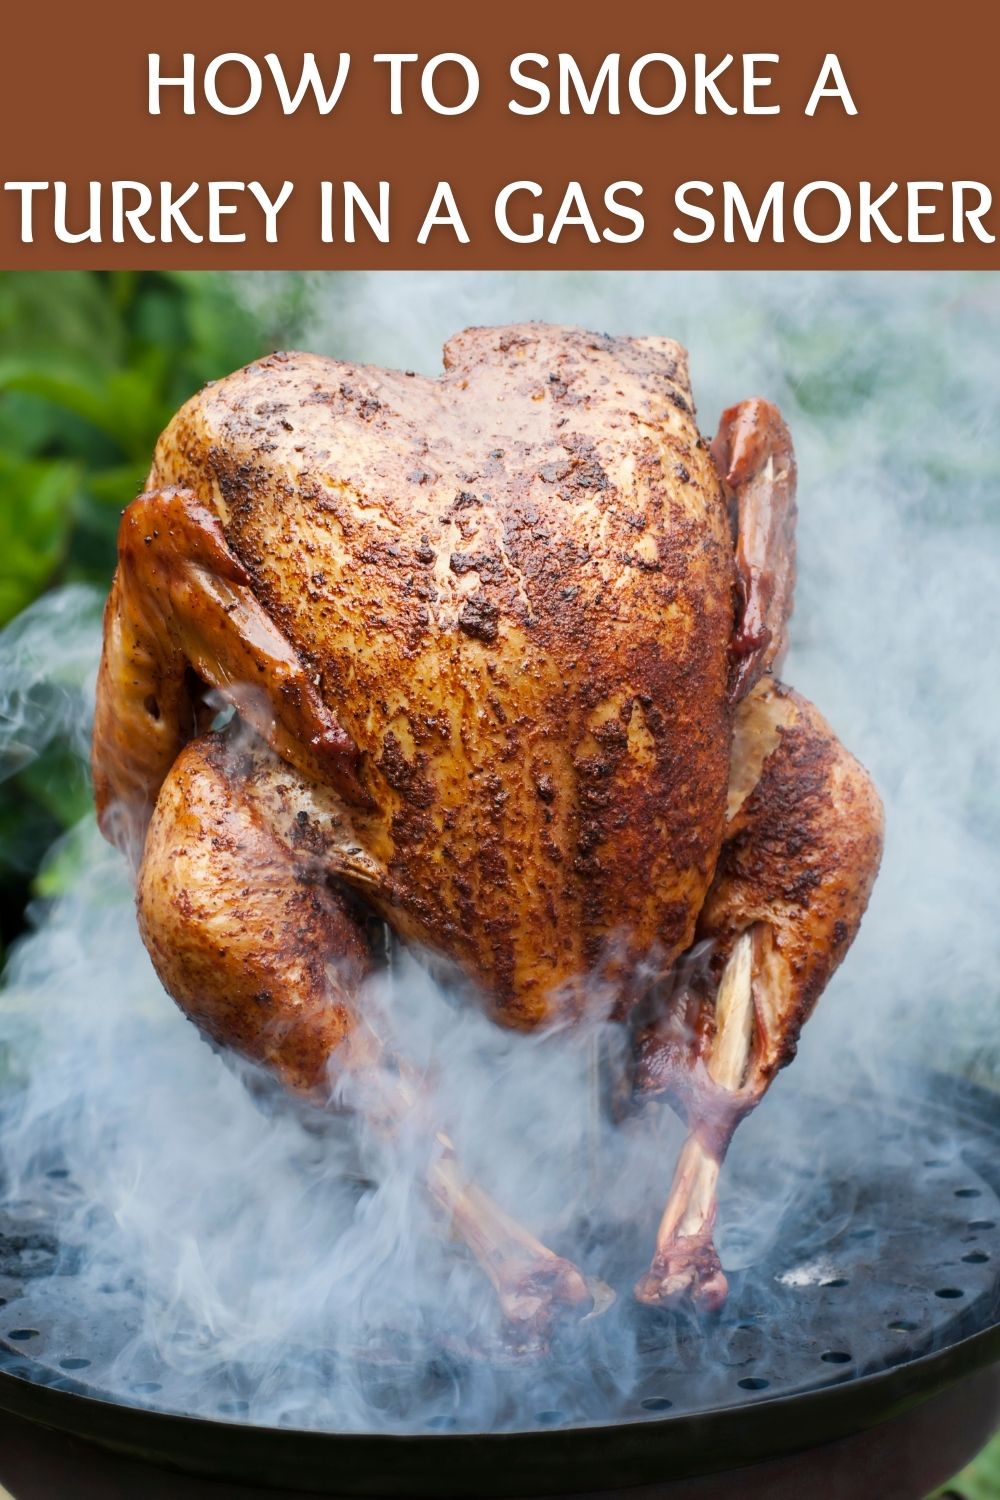 How To Smoke a Turkey in a Gas Smoker